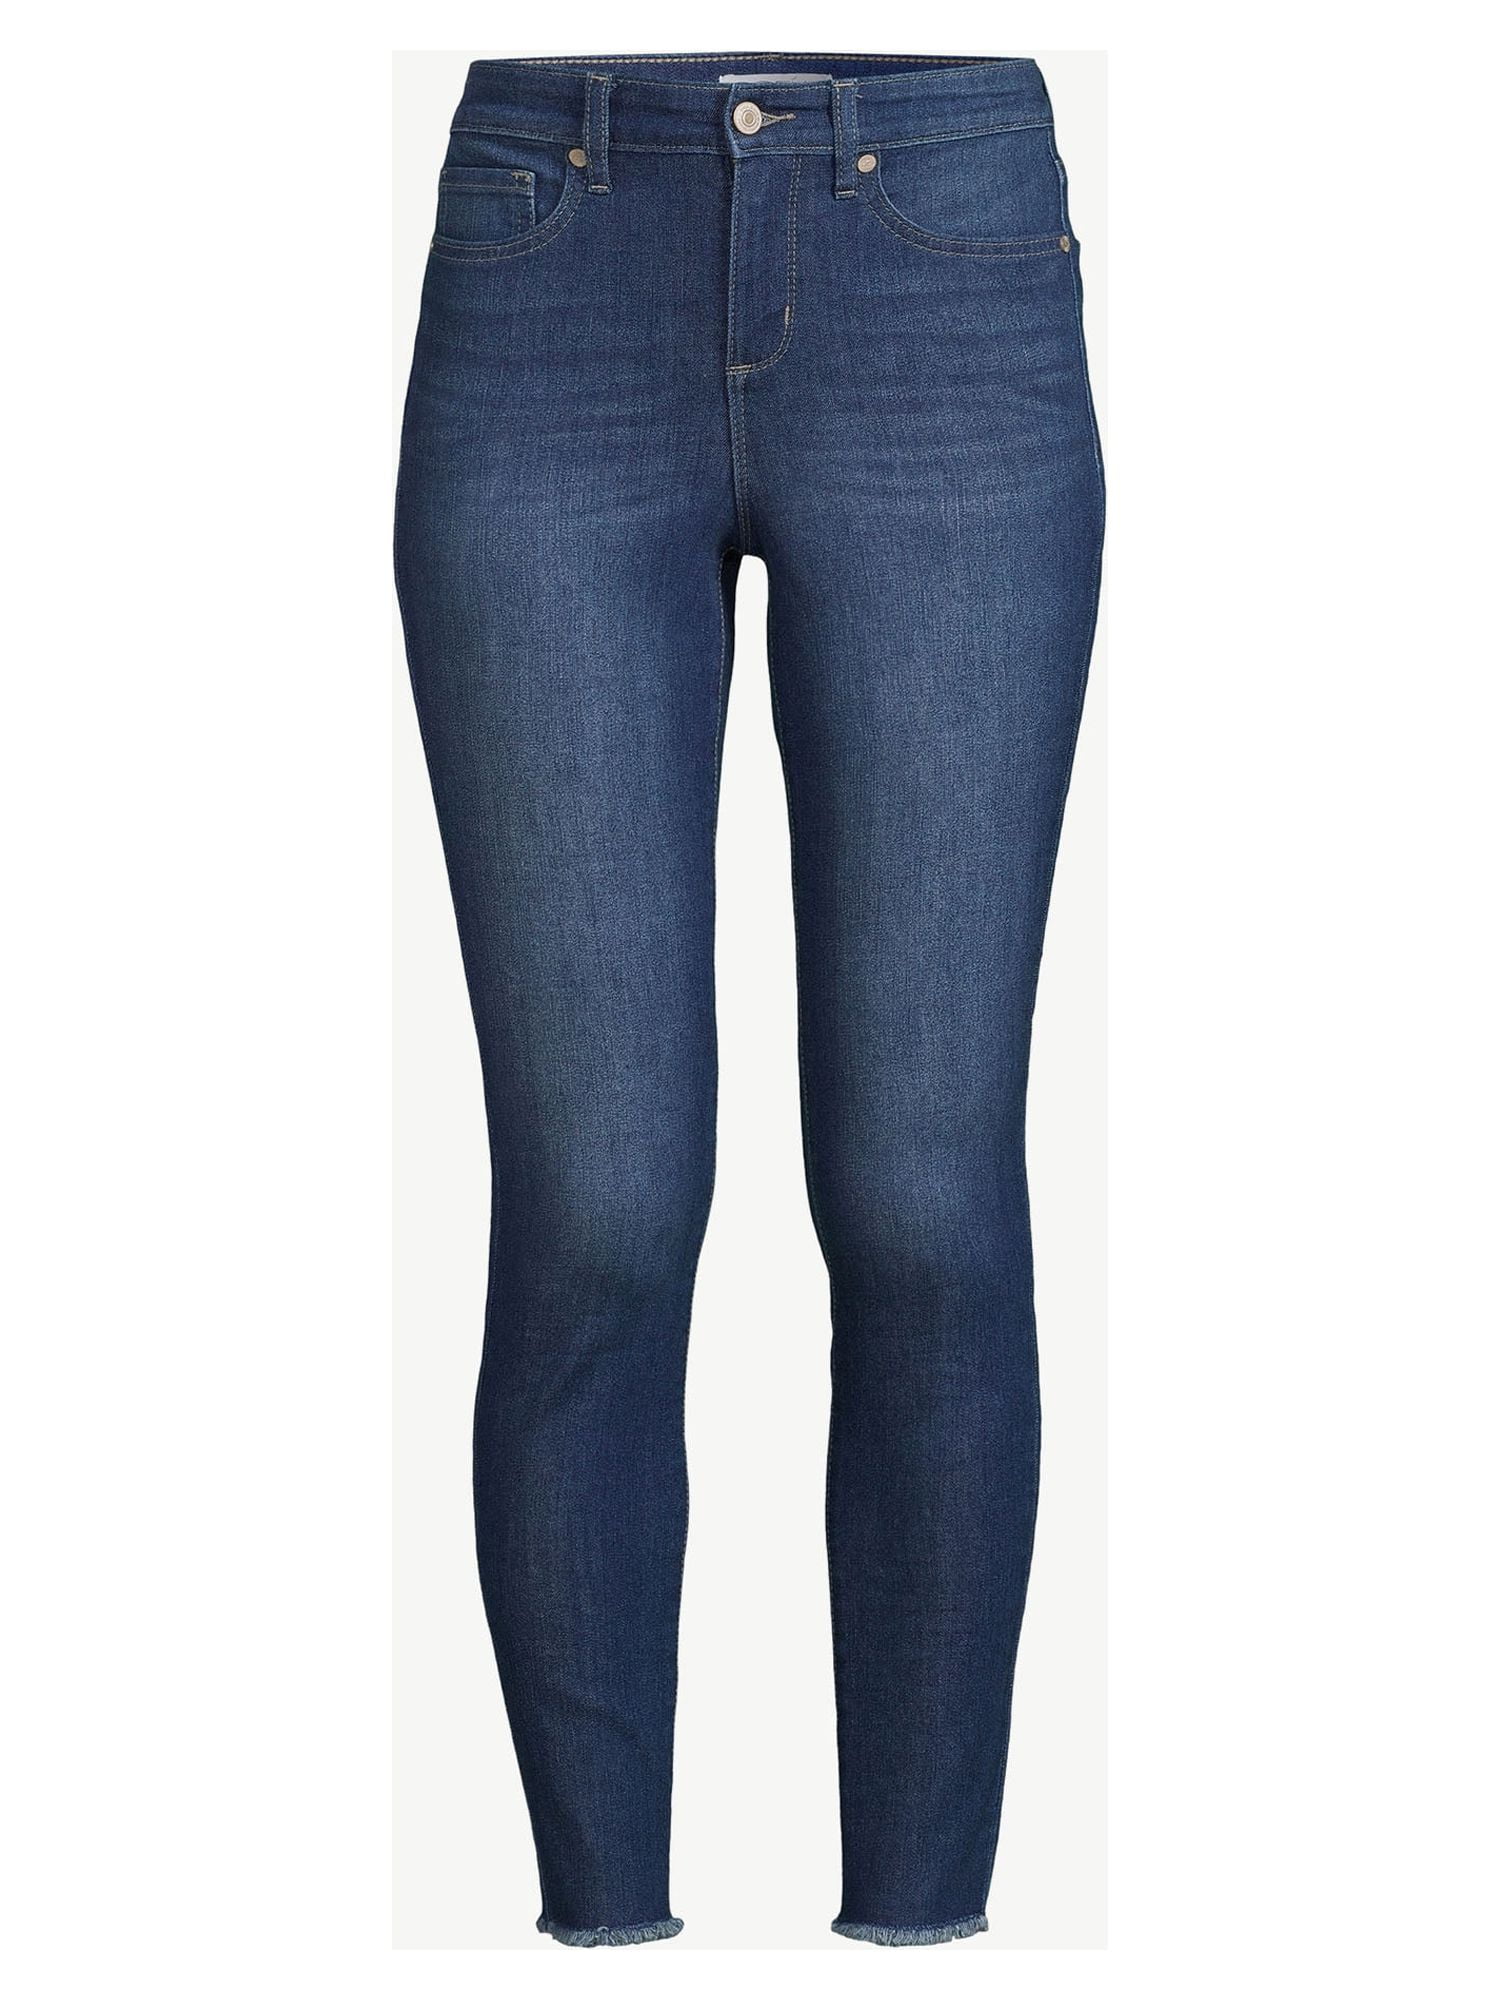 Sonoma Womens Girlfriend Ankle Jeans Petite 18 Blue Denim High